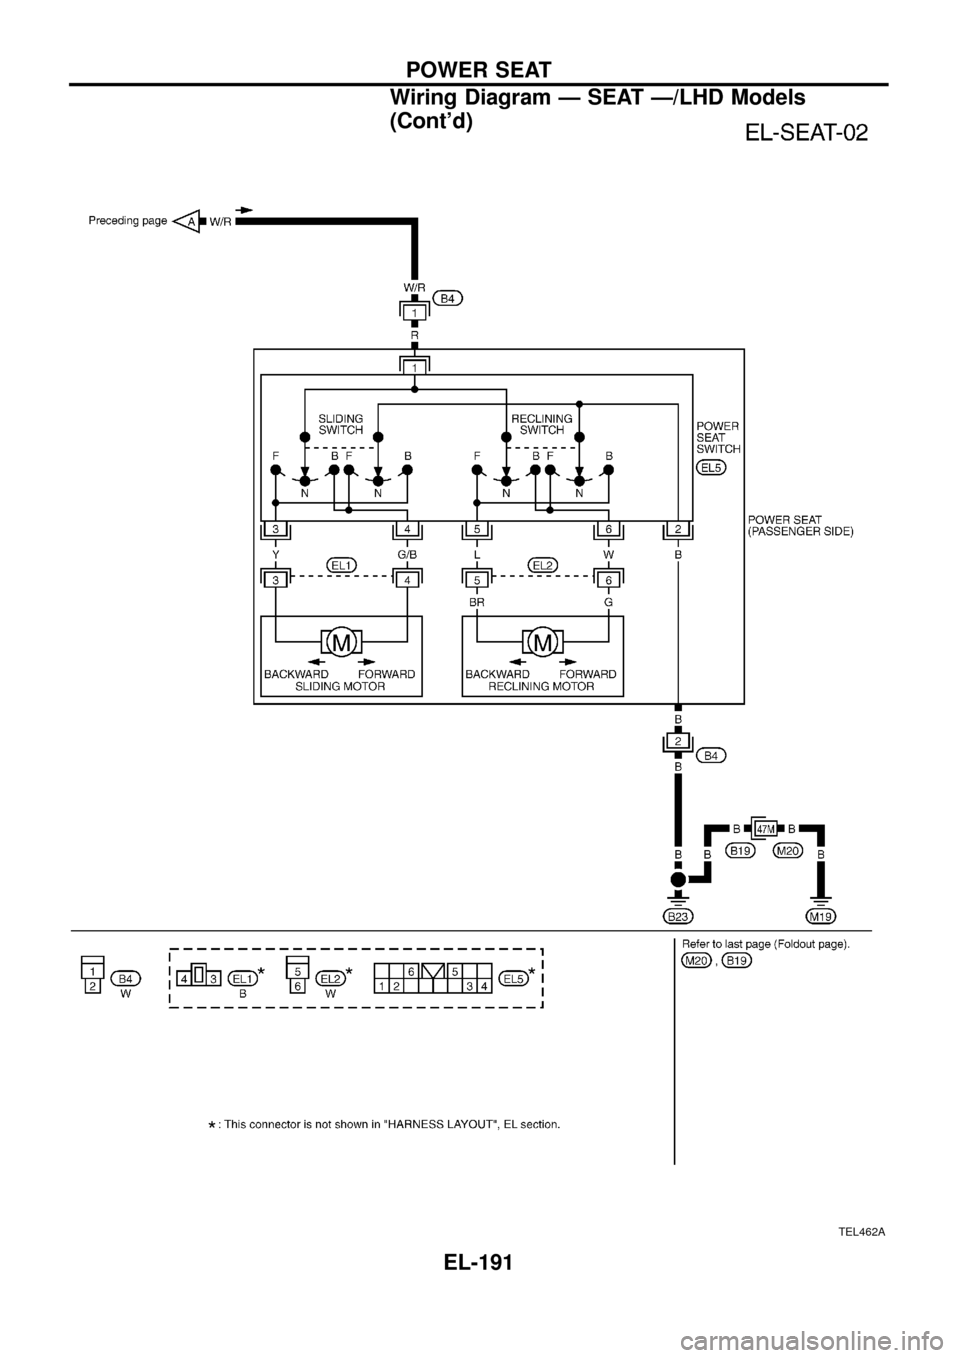 NISSAN PATROL 1998 Y61 / 5.G Electrical System Workshop Manual TEL462A
POWER SEAT
Wiring Diagram Ð SEAT Ð/LHD Models
(Contd)
EL-191 